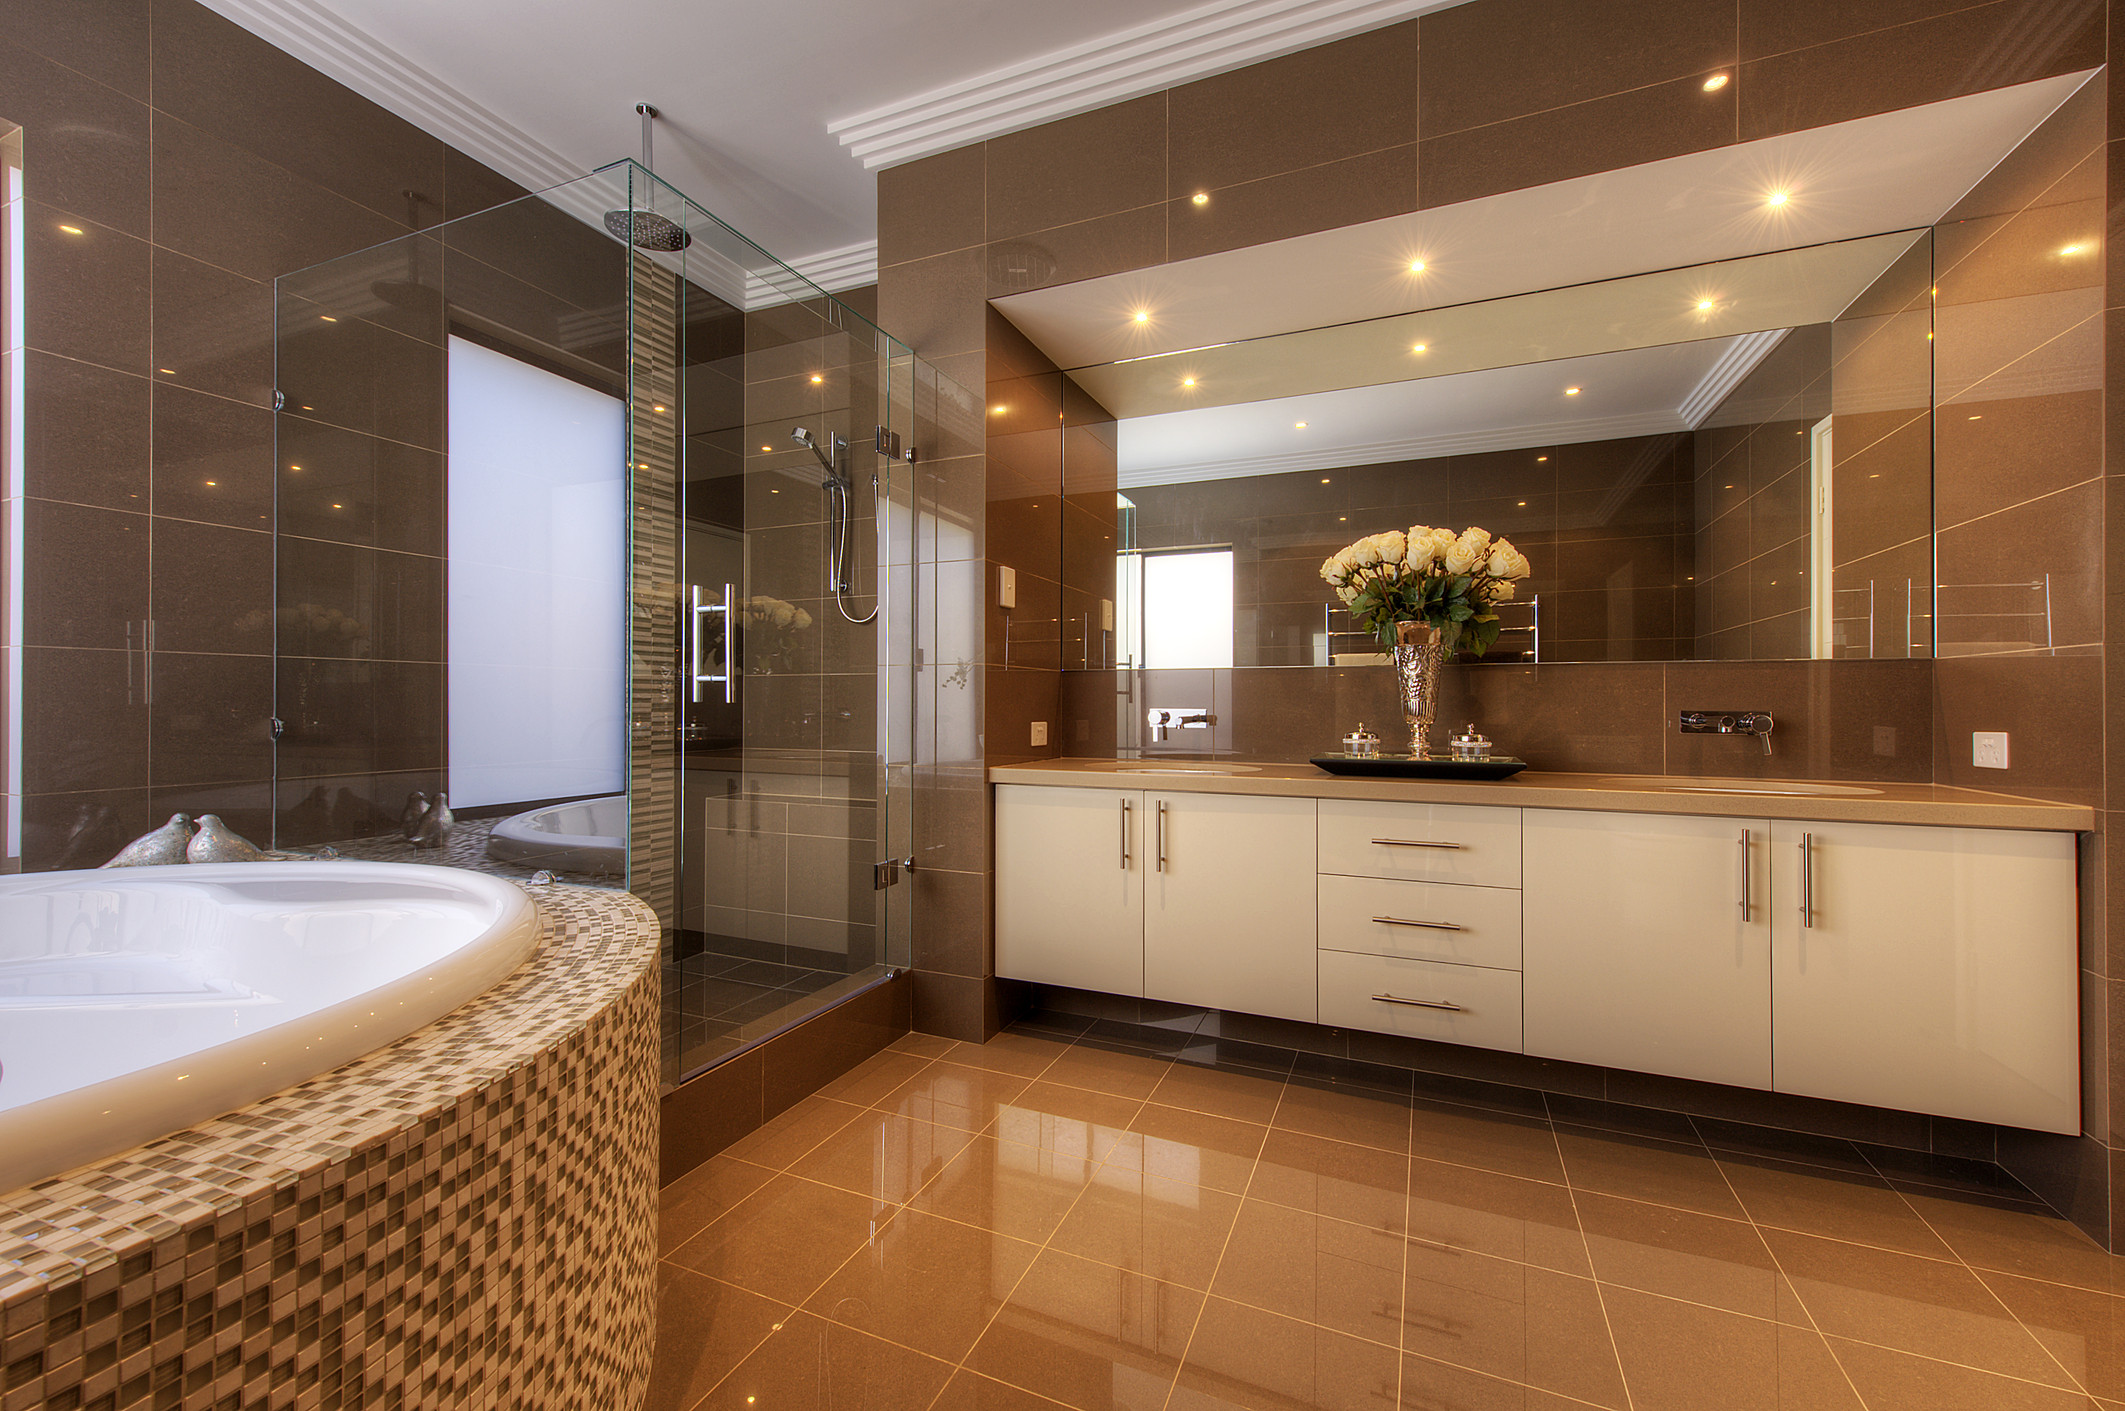 Luxury Bathroom Designs Gallery
 10 Luxury Bathroom Features you need in your life